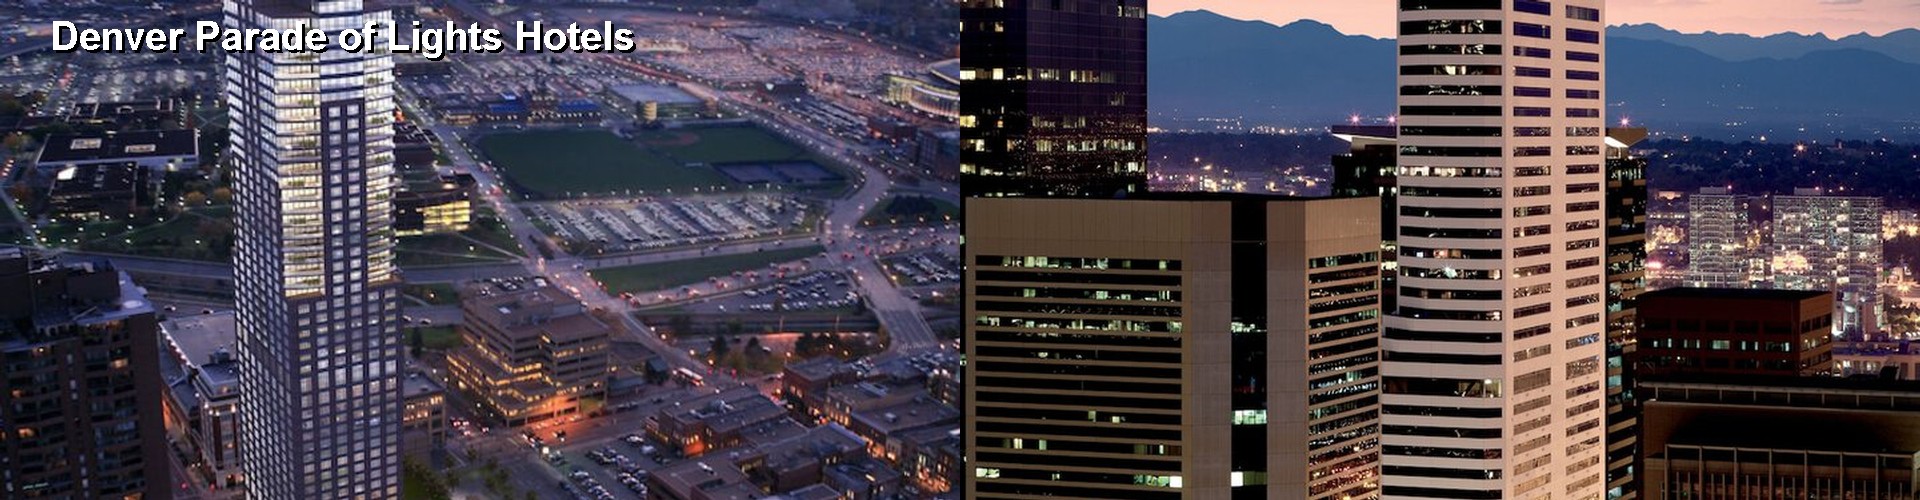 5 Best Hotels near Denver Parade of Lights